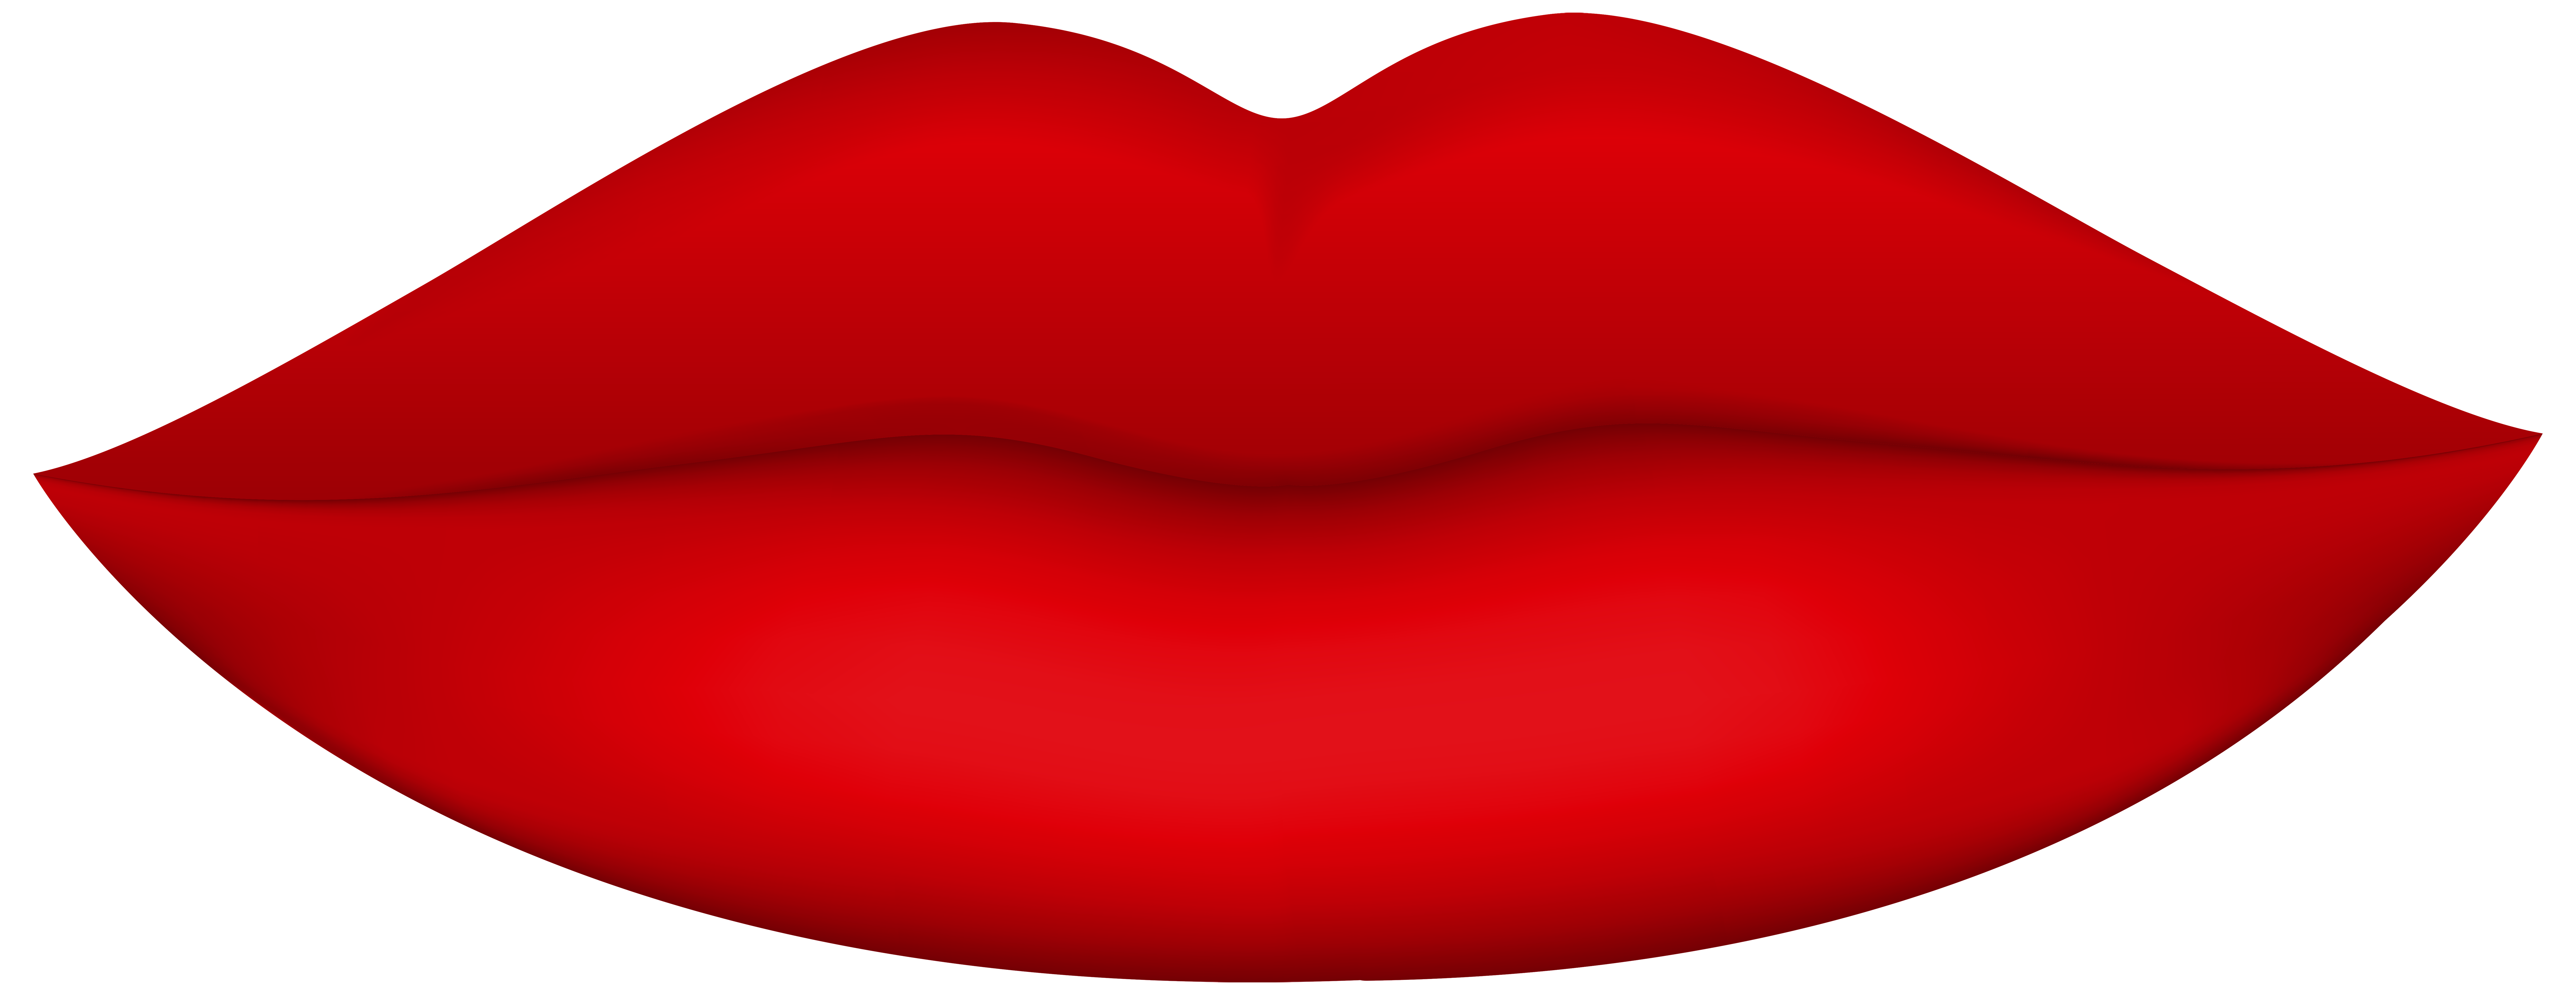 Lips Clip Art Free Kiss .